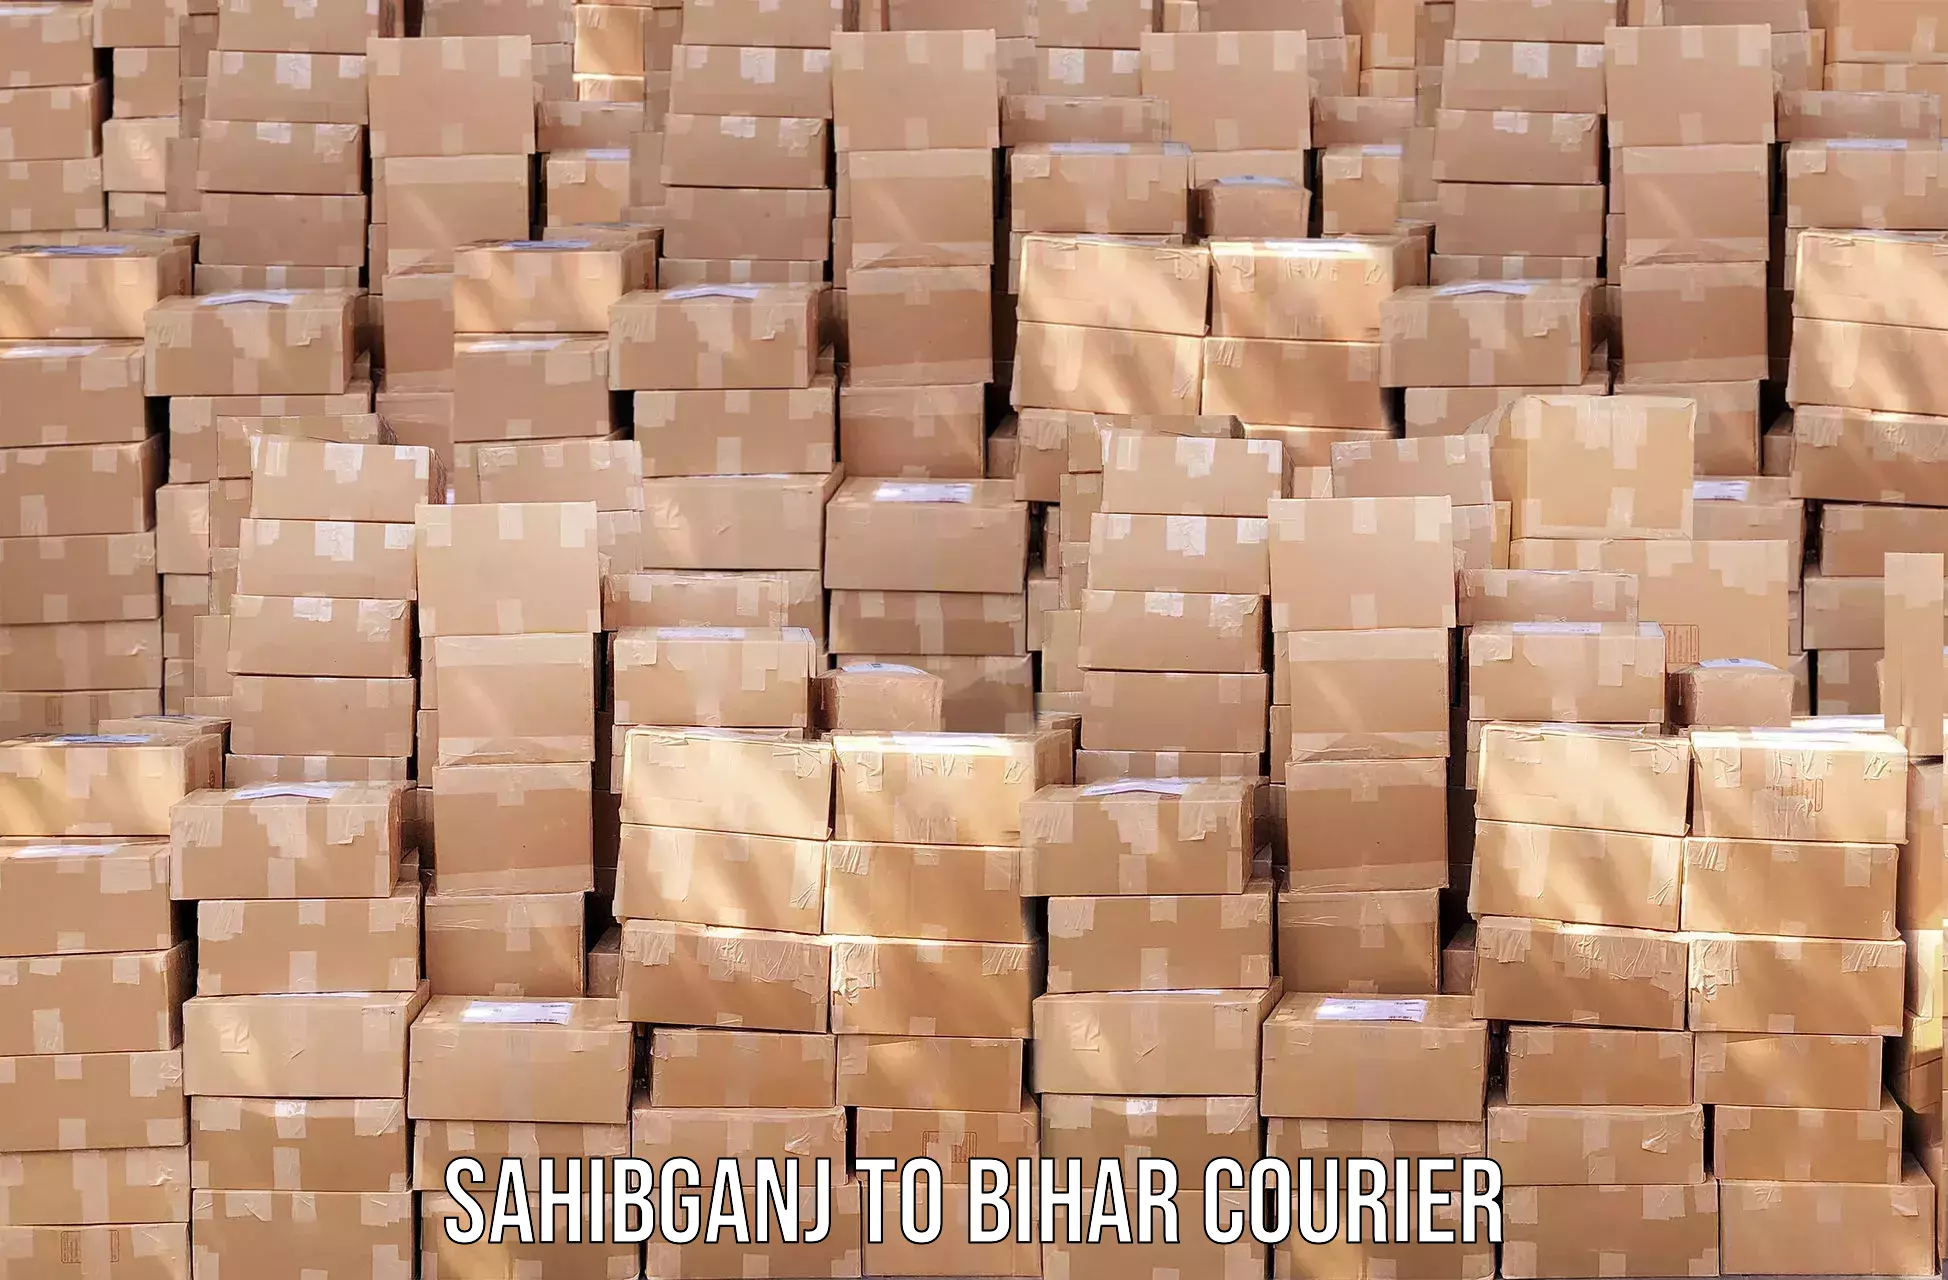 Courier service comparison Sahibganj to Hajipur